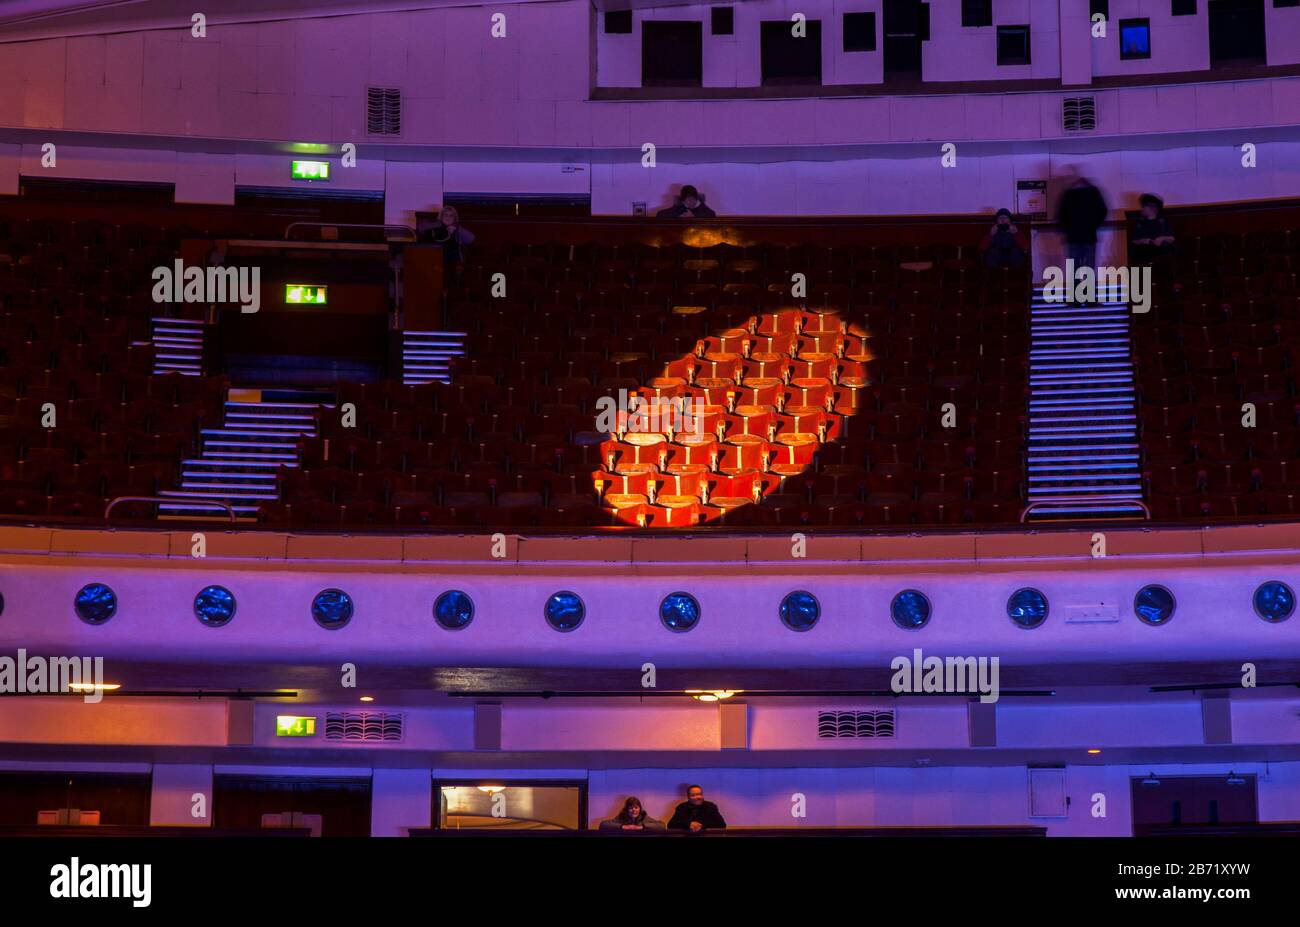 Theatre spotlight in the Opera House Blackpool shining on seats in the balcony. Stock Photo